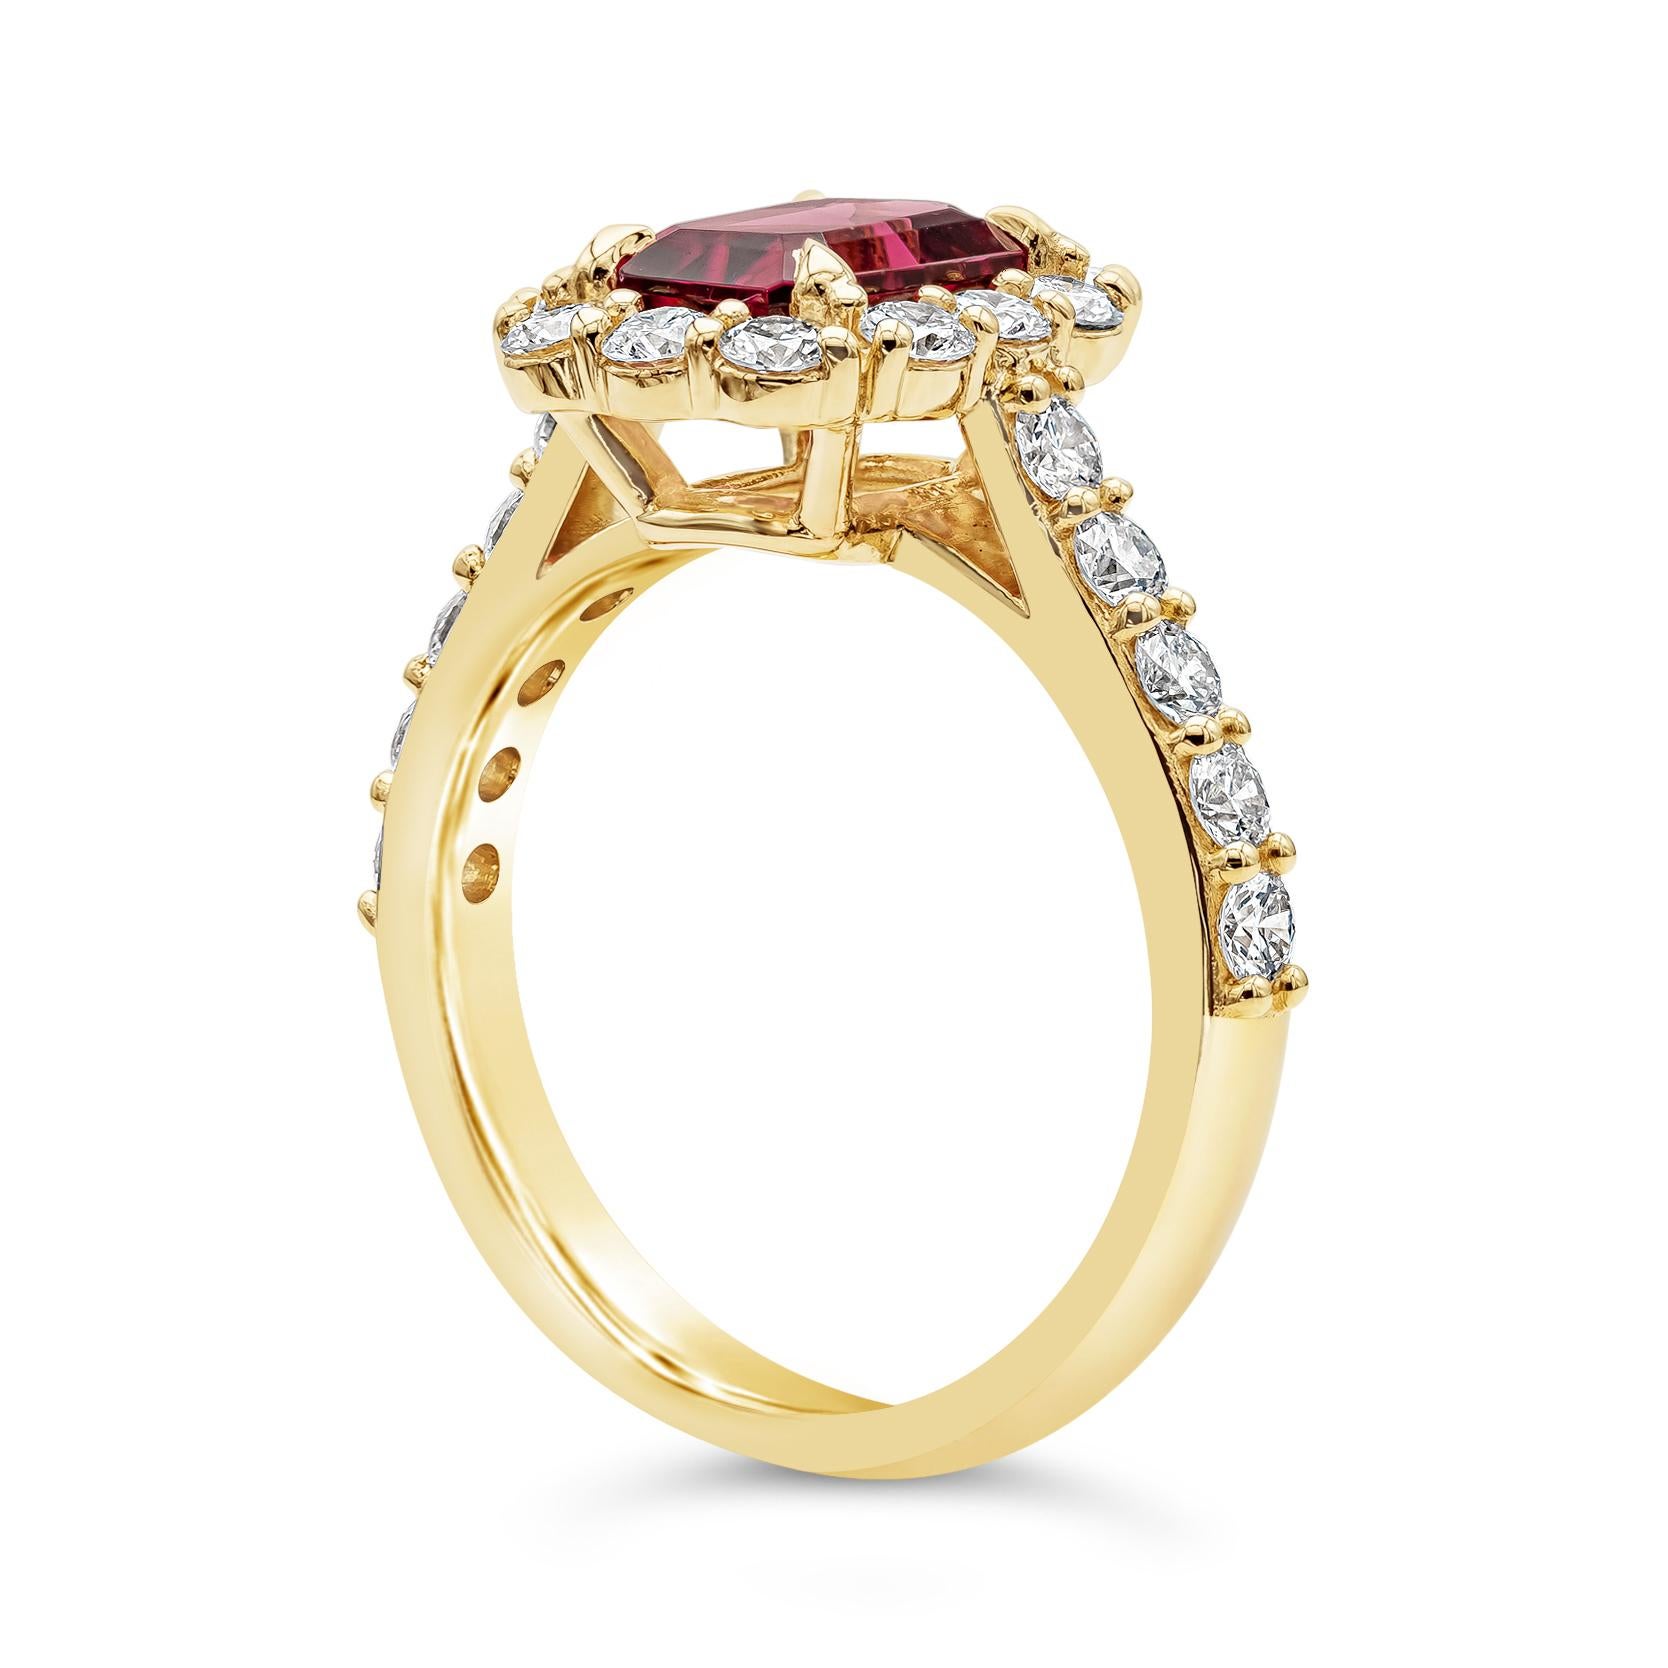 Contemporary Roman Malakov 1.58 Carats Emerald Cut Rubellite and Diamond Halo Engagement Ring